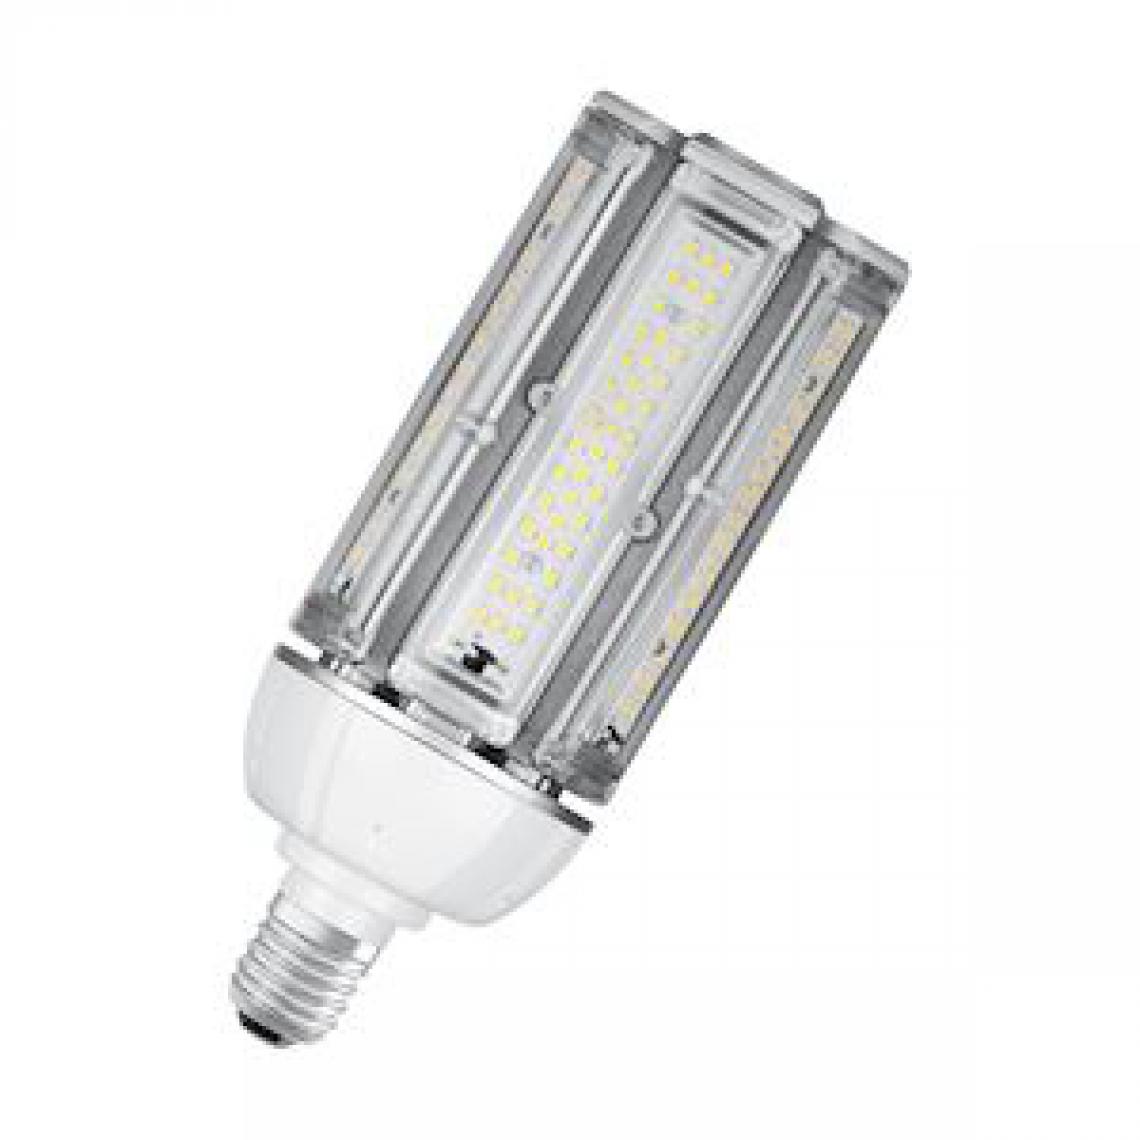 Osram - ampoule à led - osram hql led - pro 250 - e40 - 95w - 2700k - 11700 lm - ip65 - osram 125001 - Ampoules LED